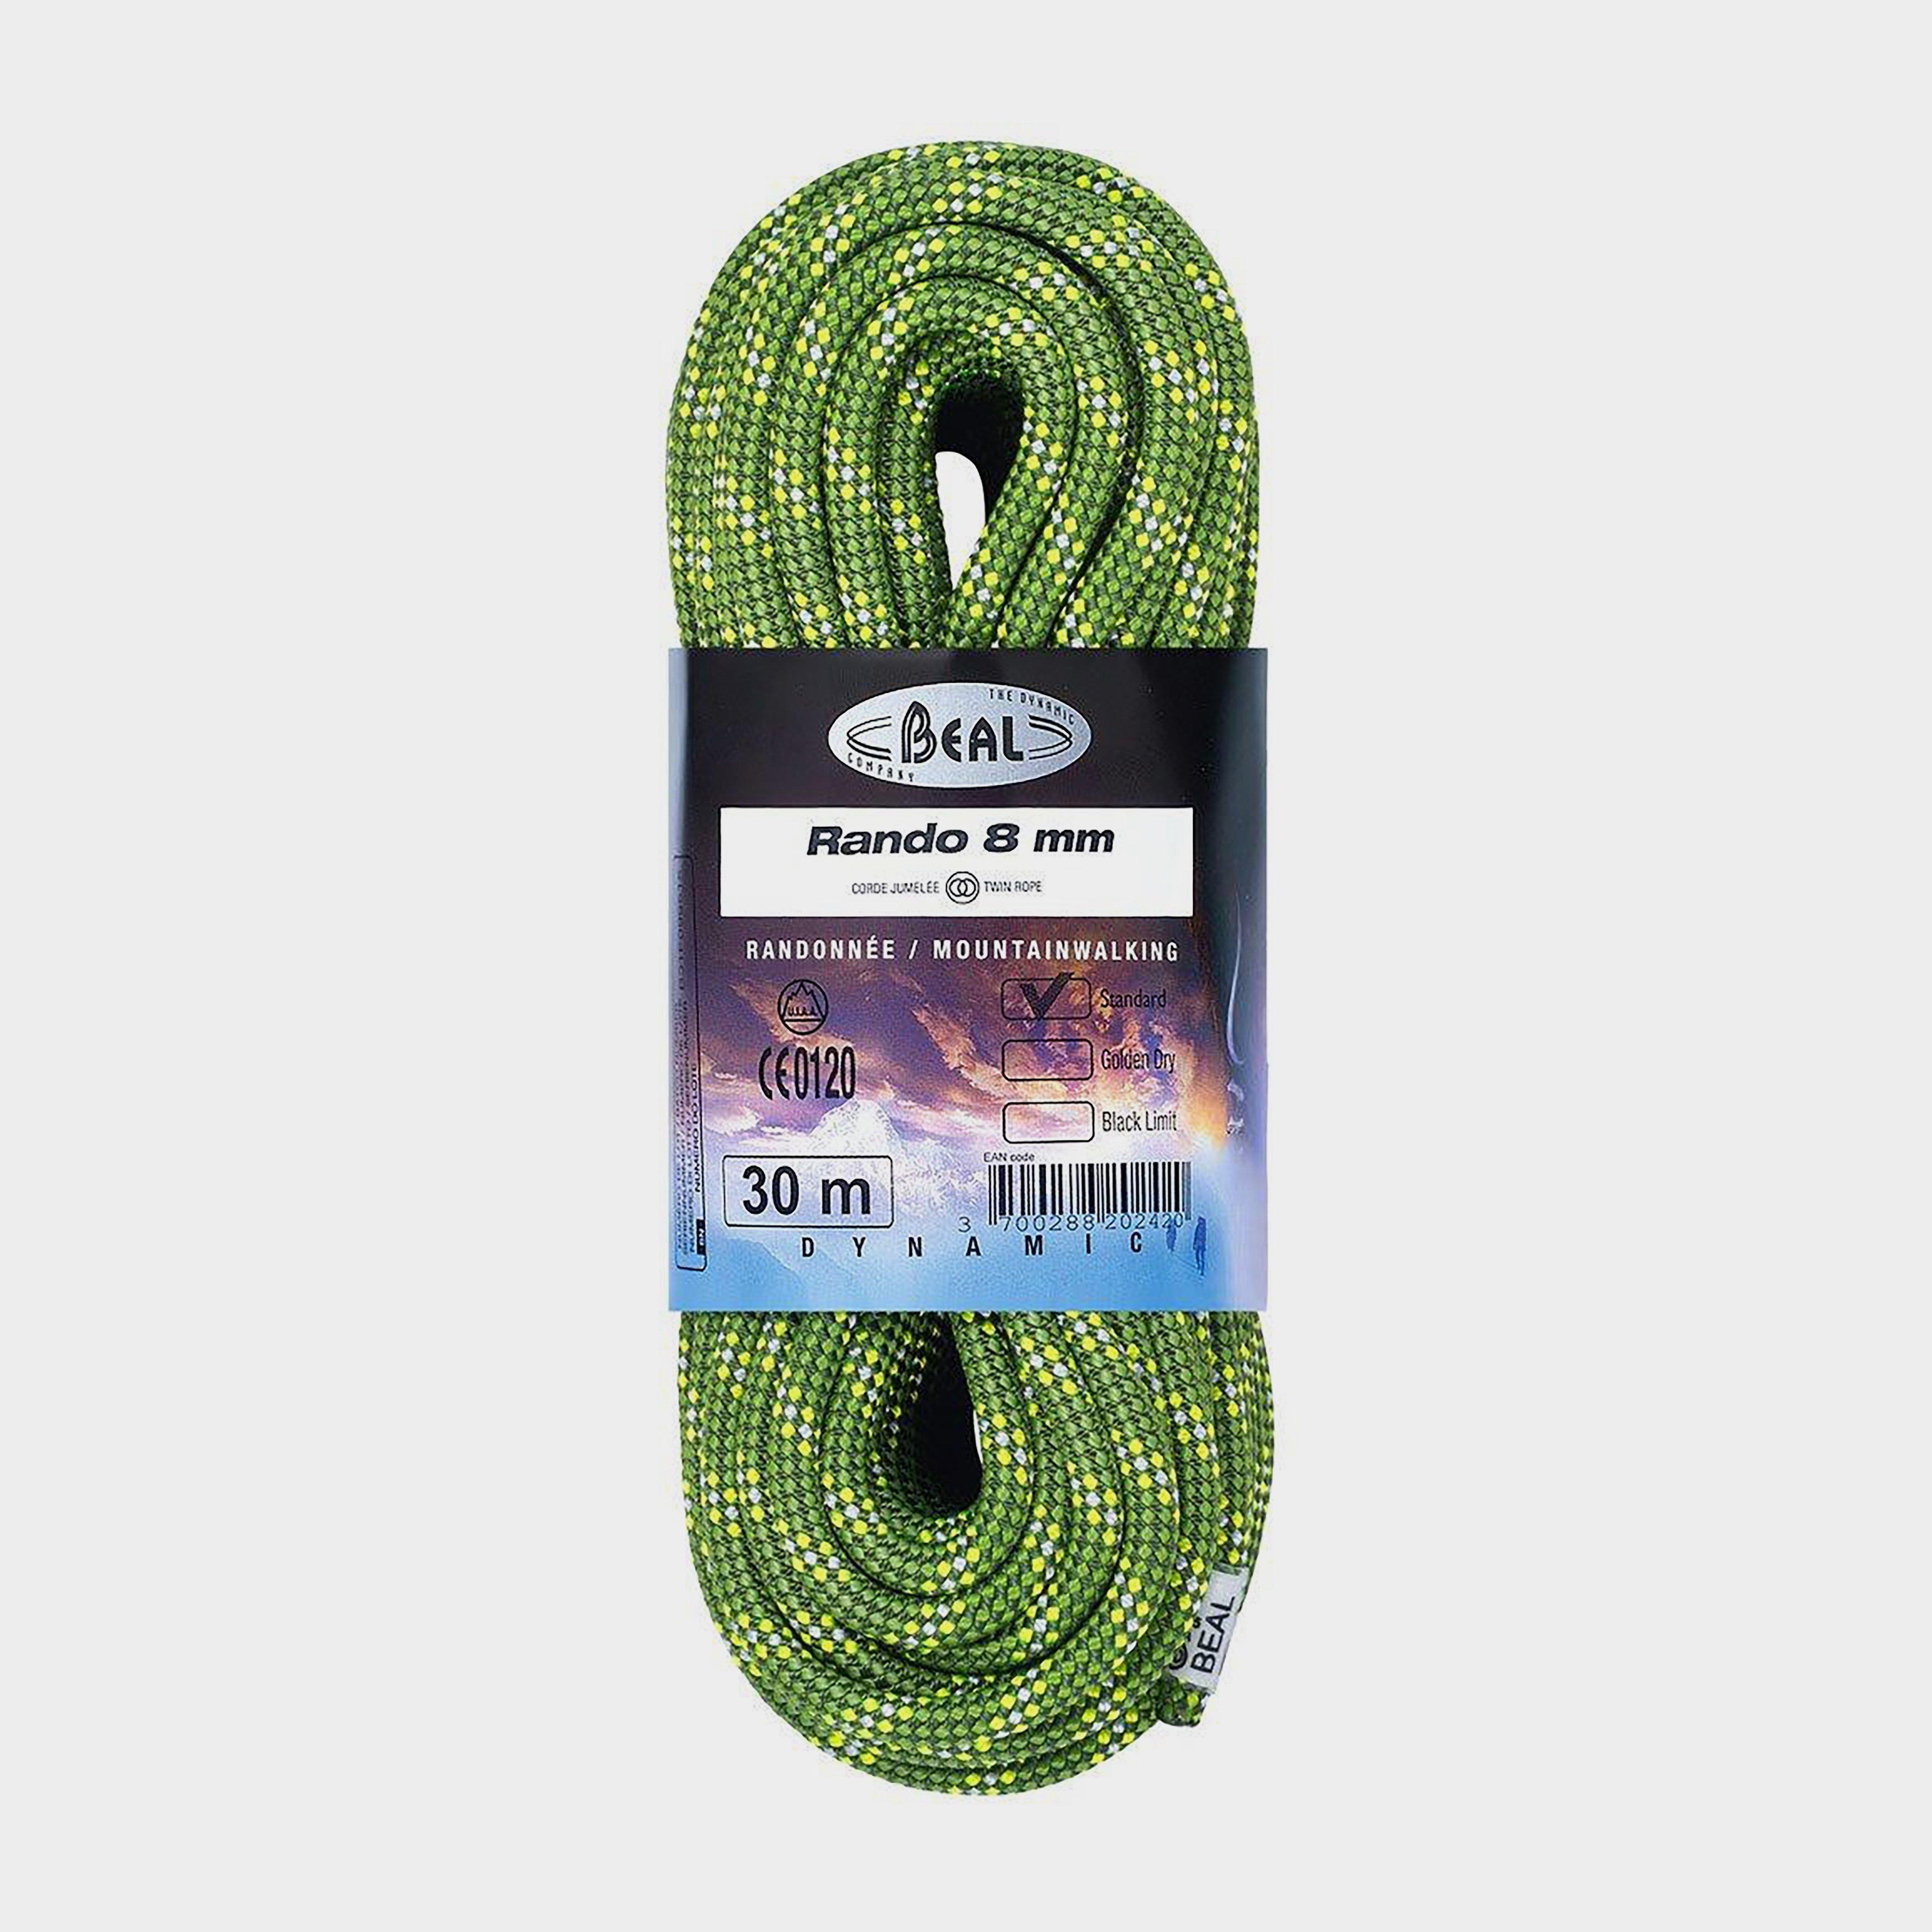  Beal Rando 8mm Walkers Rope (30m), Green